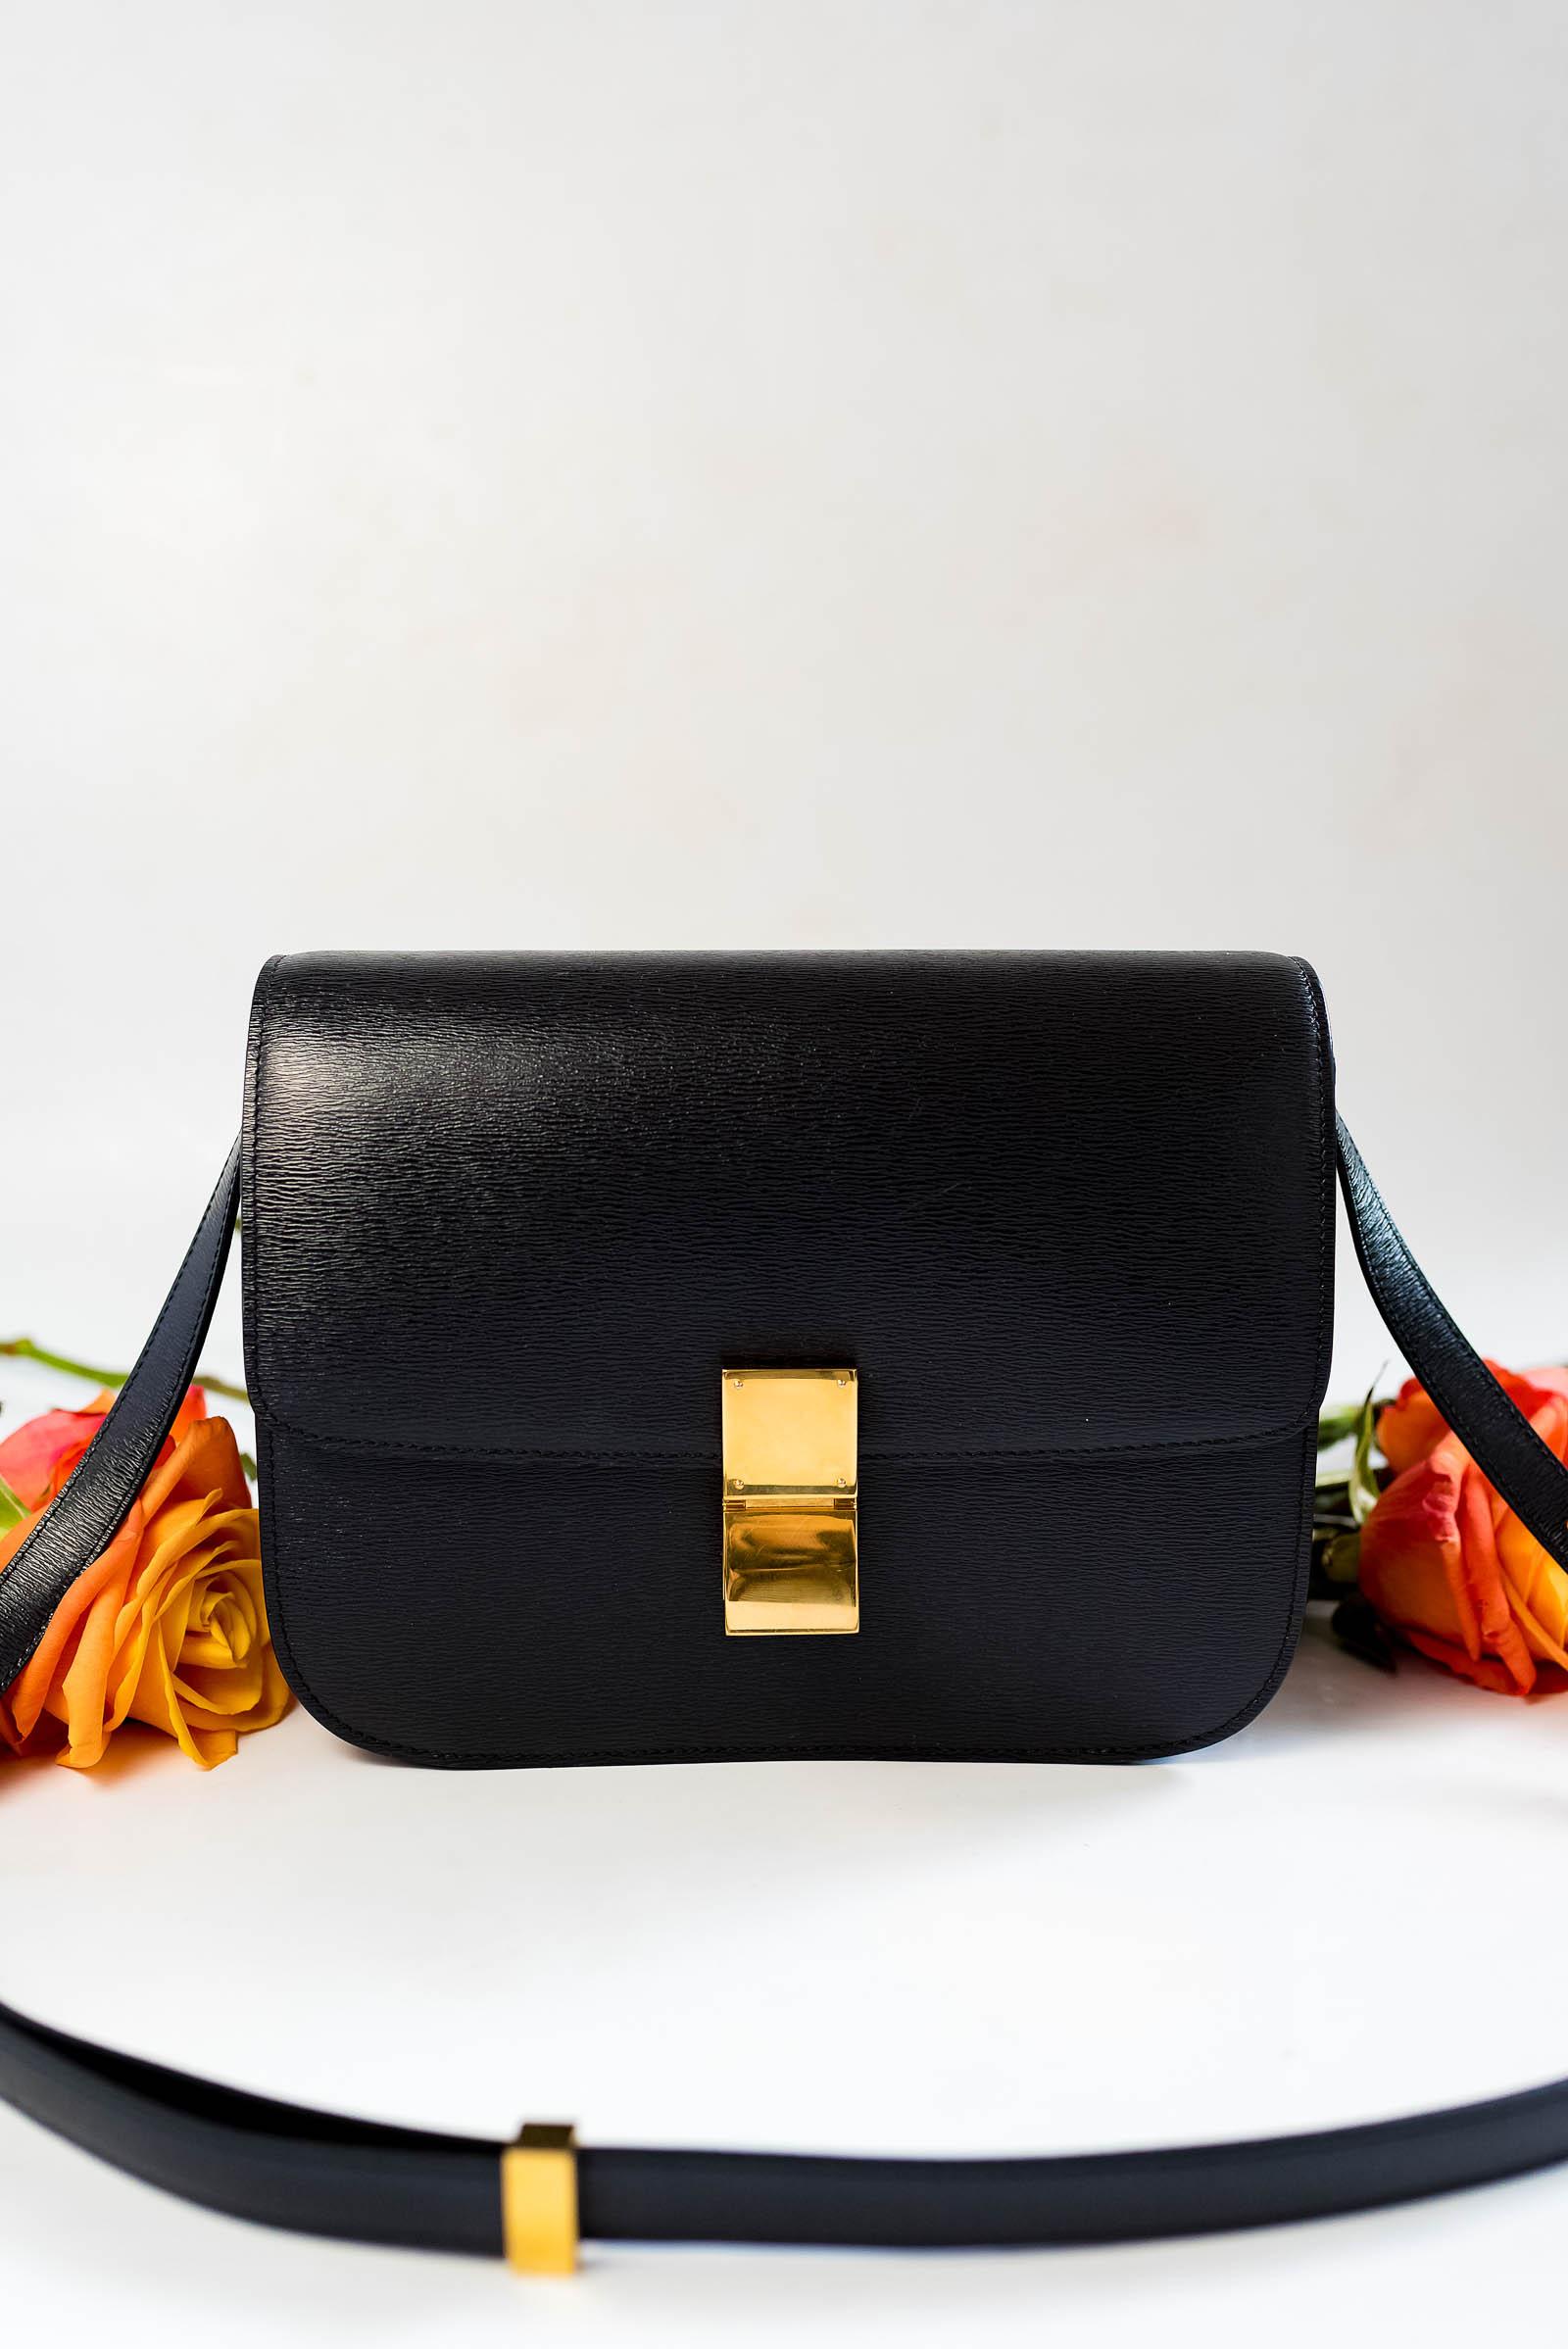 Céline Box Bag Review, 2015 Medium Black